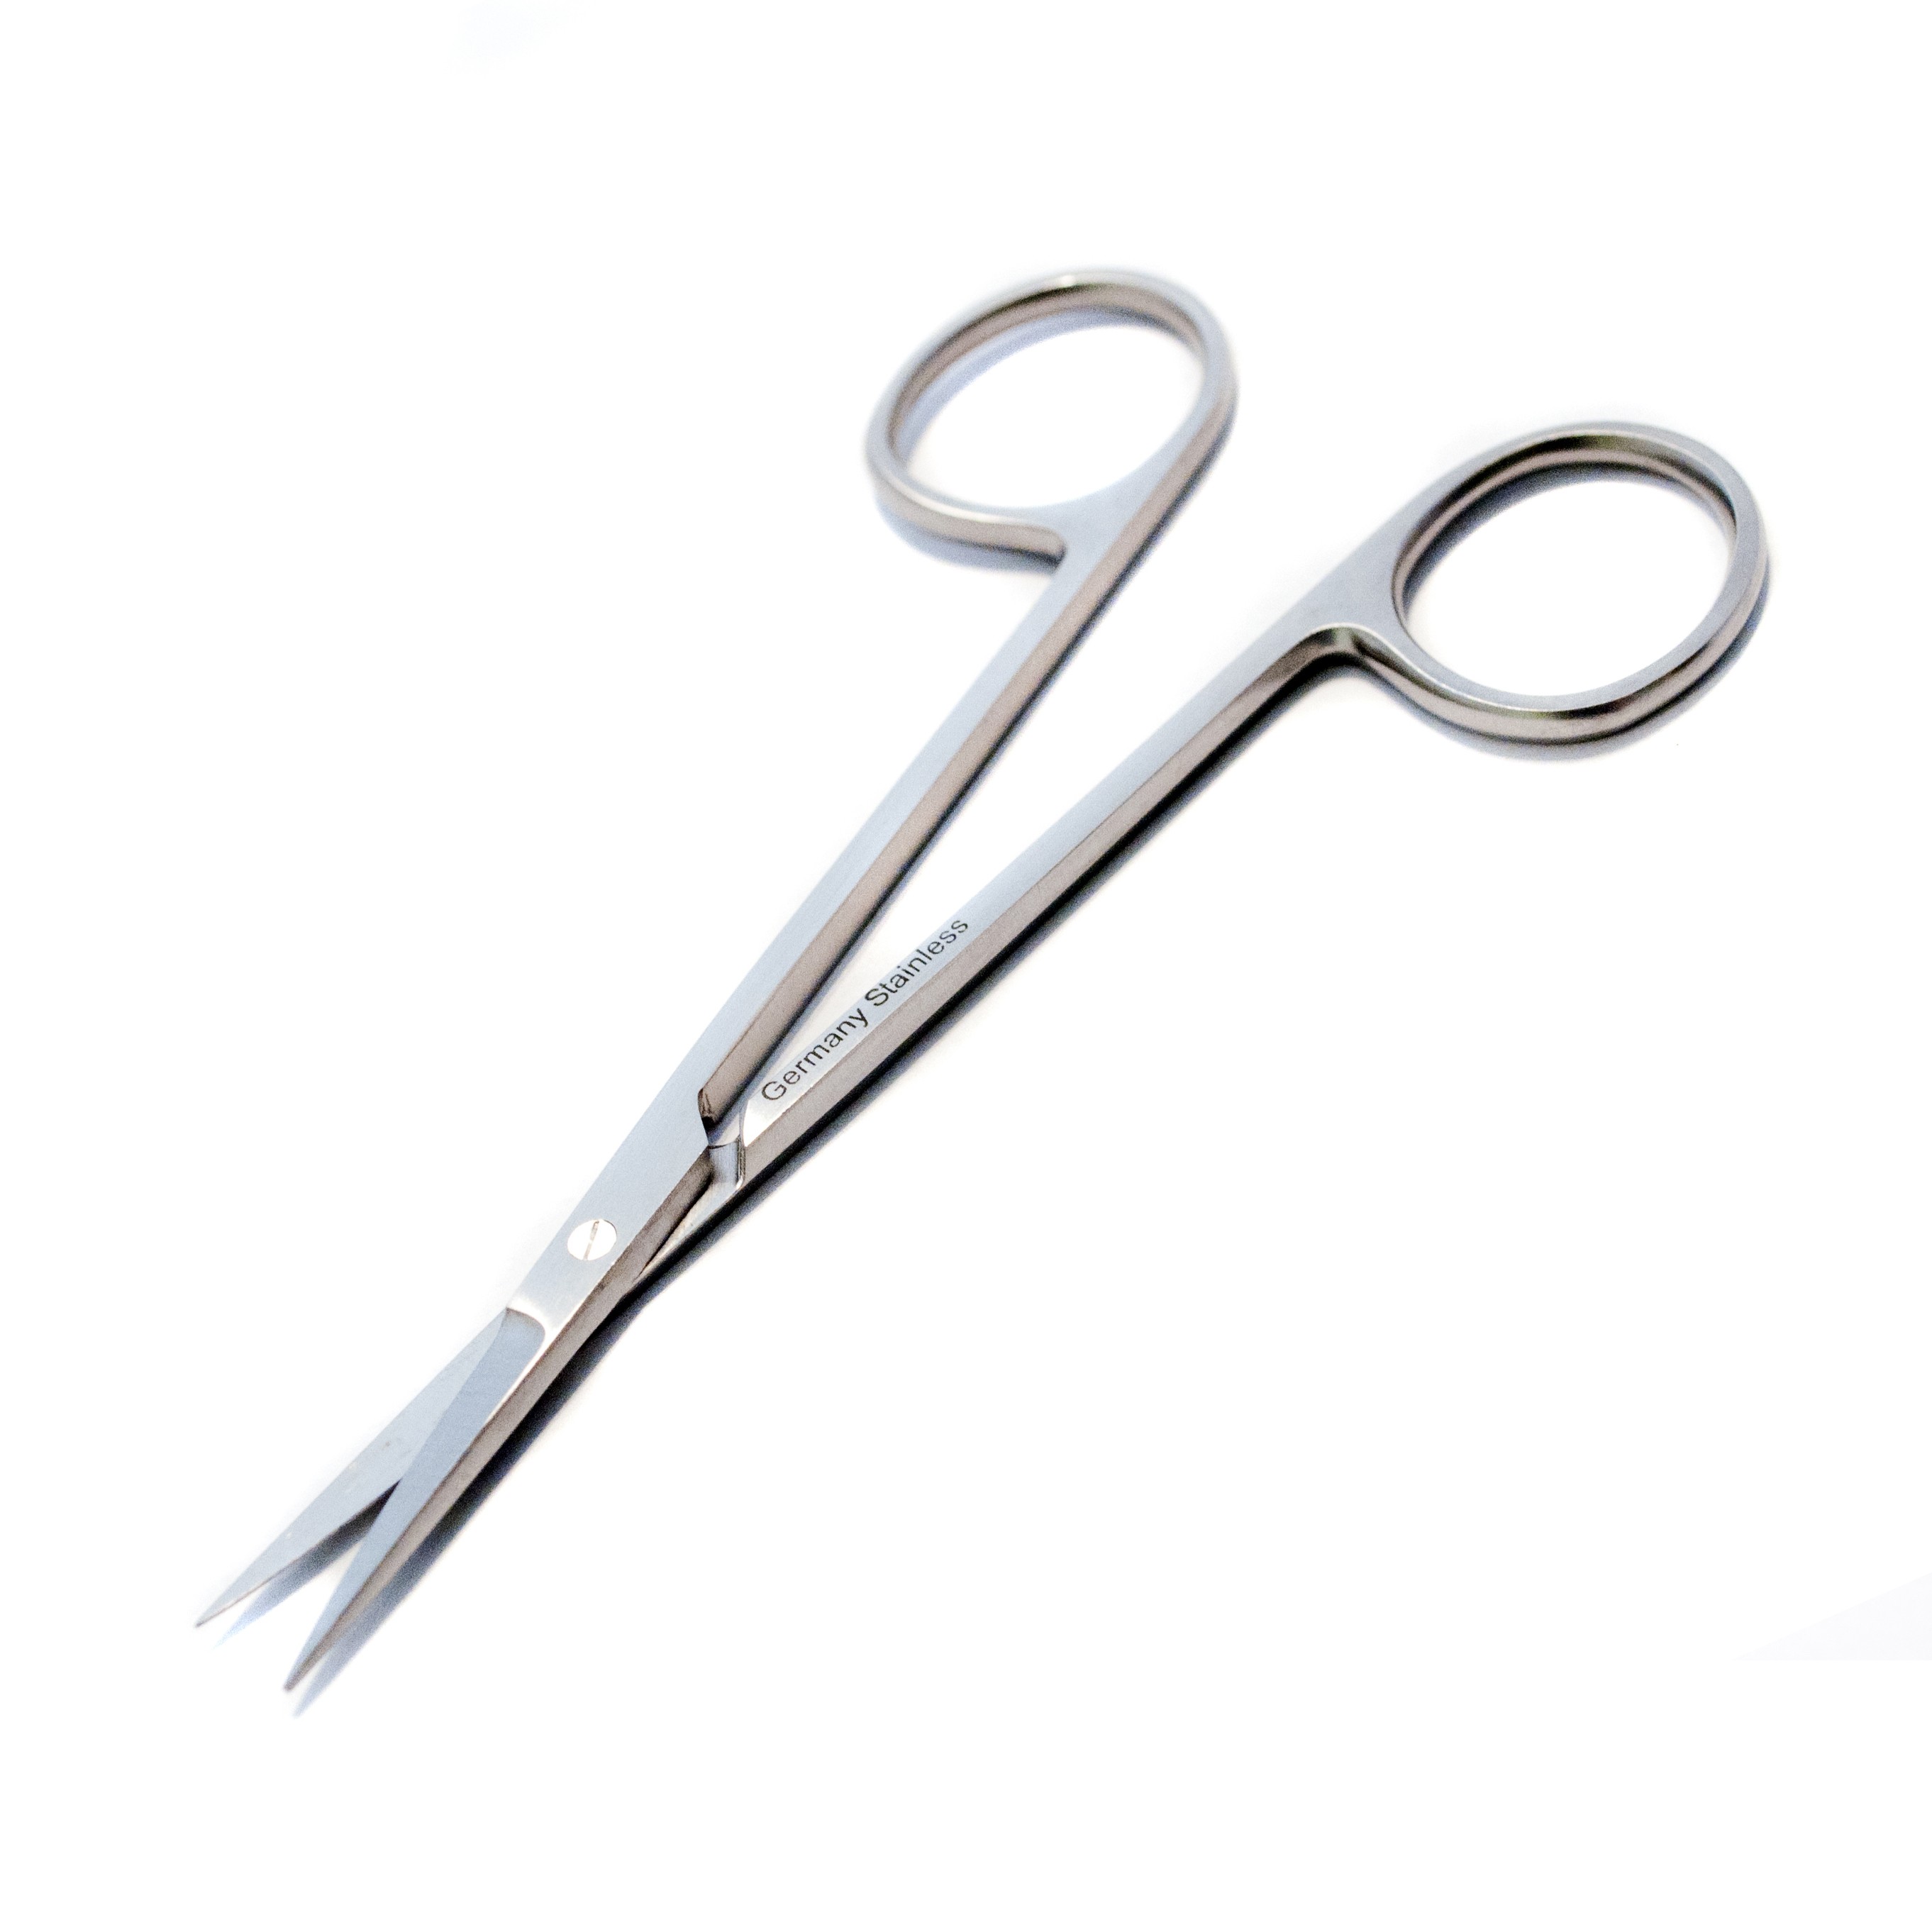 how to store scissors